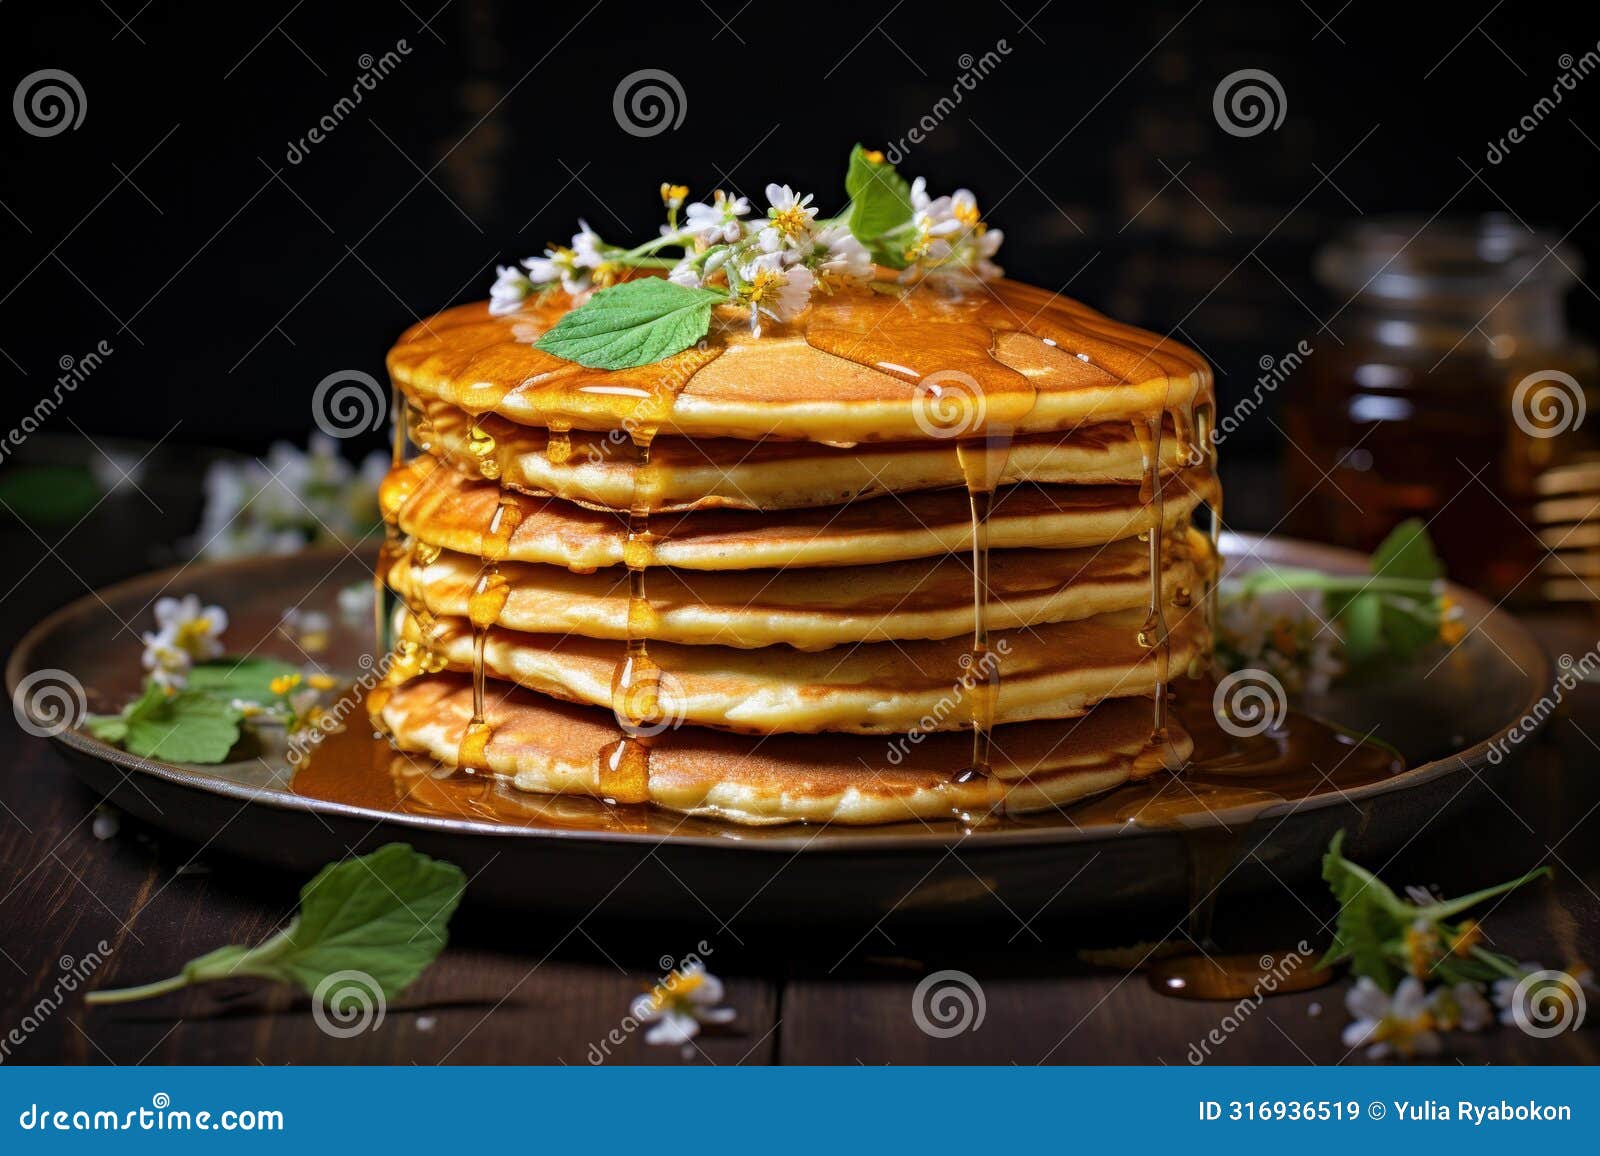 indulgent pancakes honey. generate ai